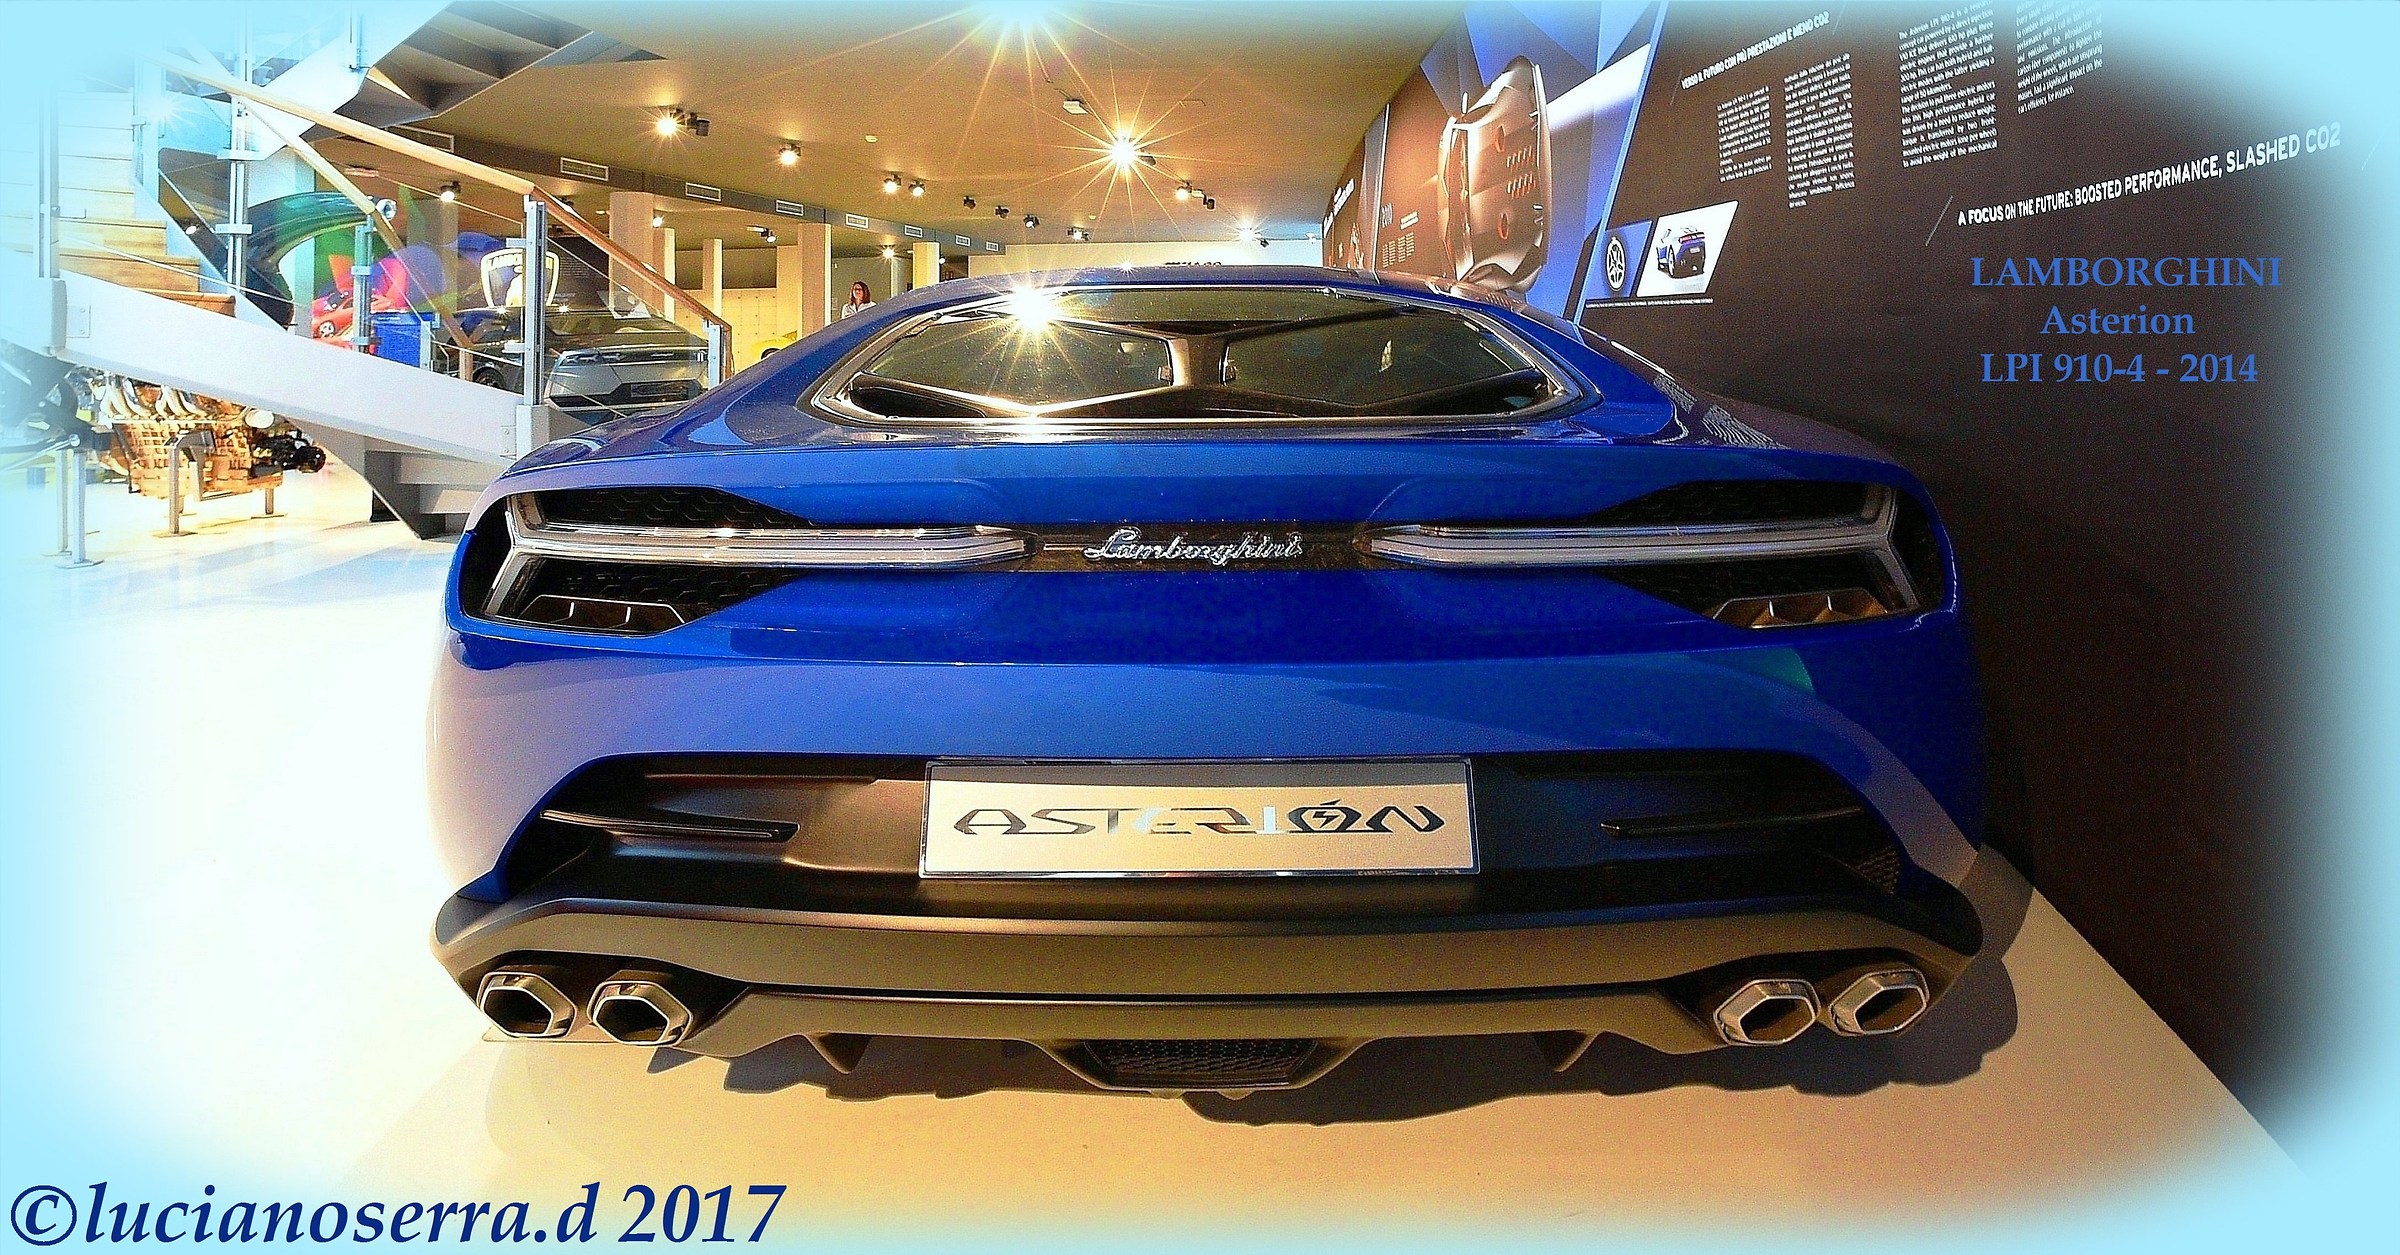 Lamborghini Asterion LPI 910-4 - 2014...